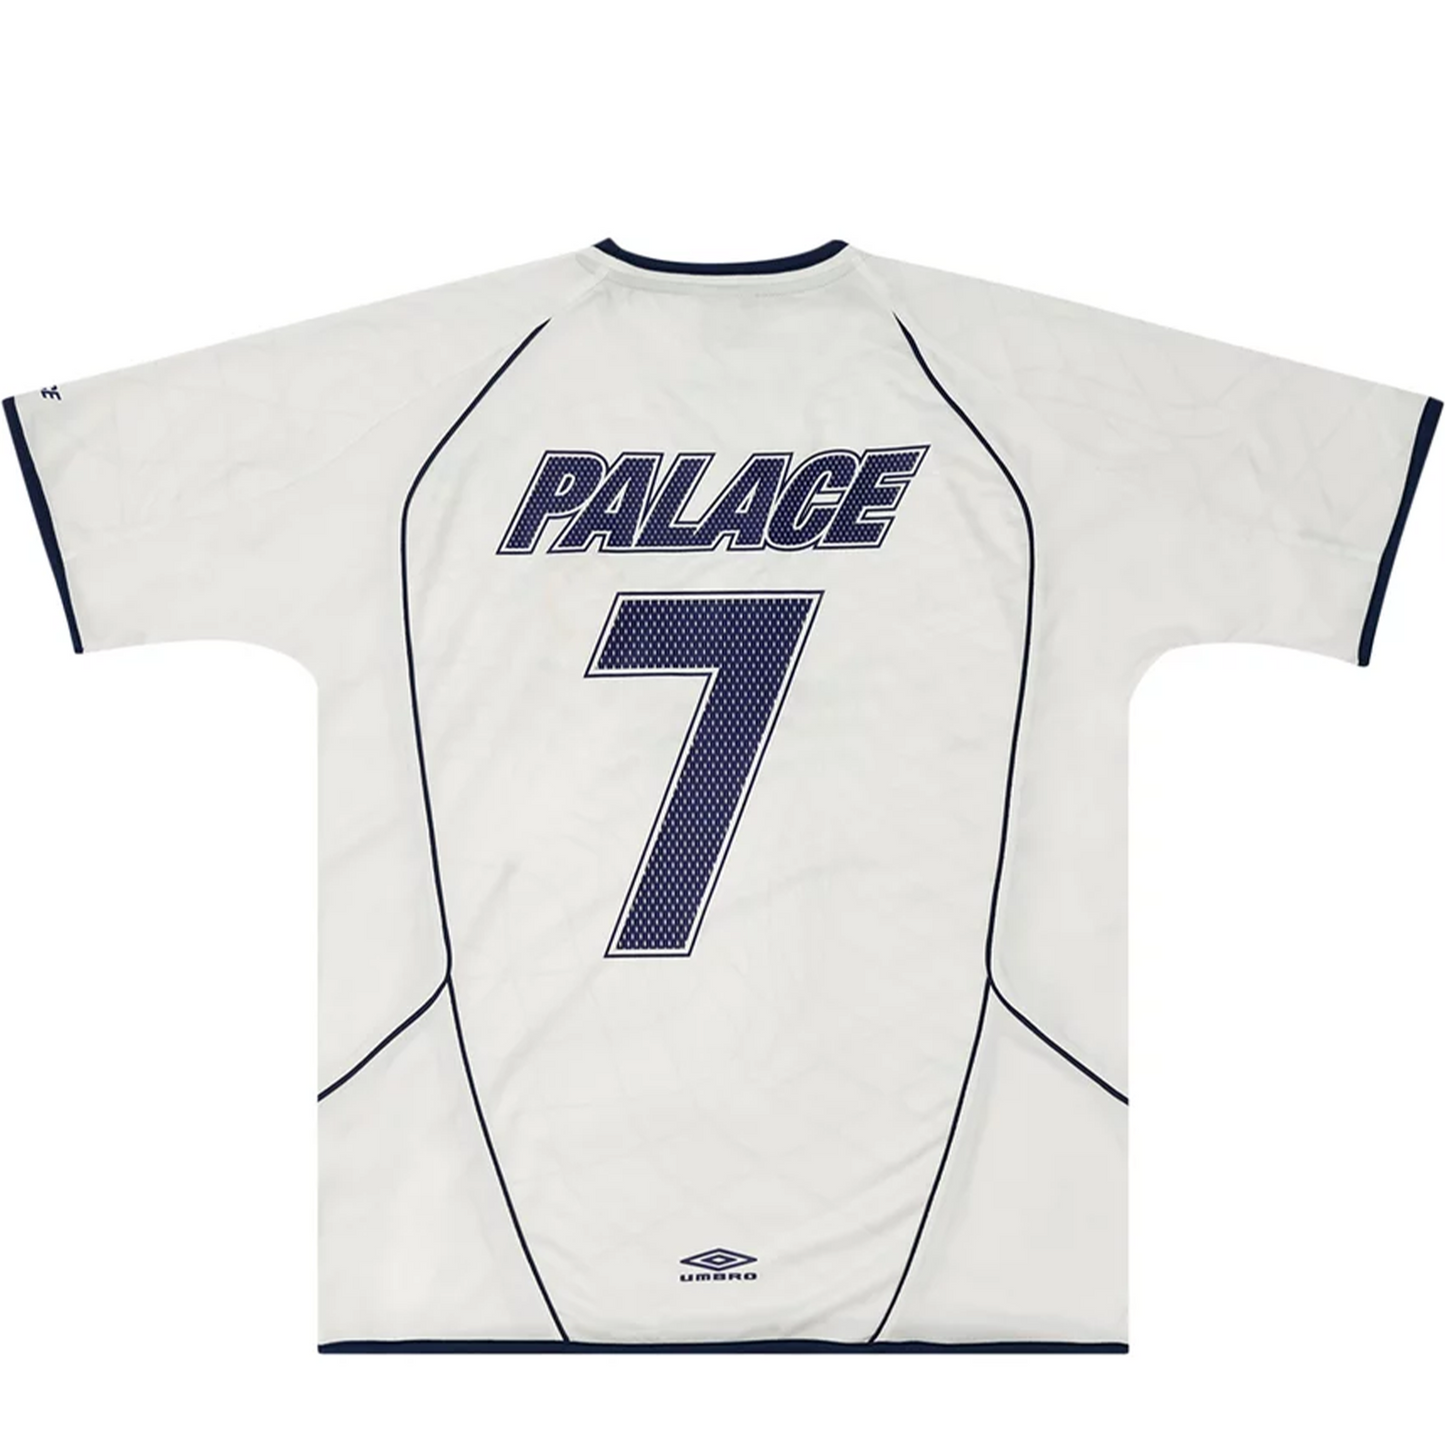 Palace x Umbro Home Shirt White